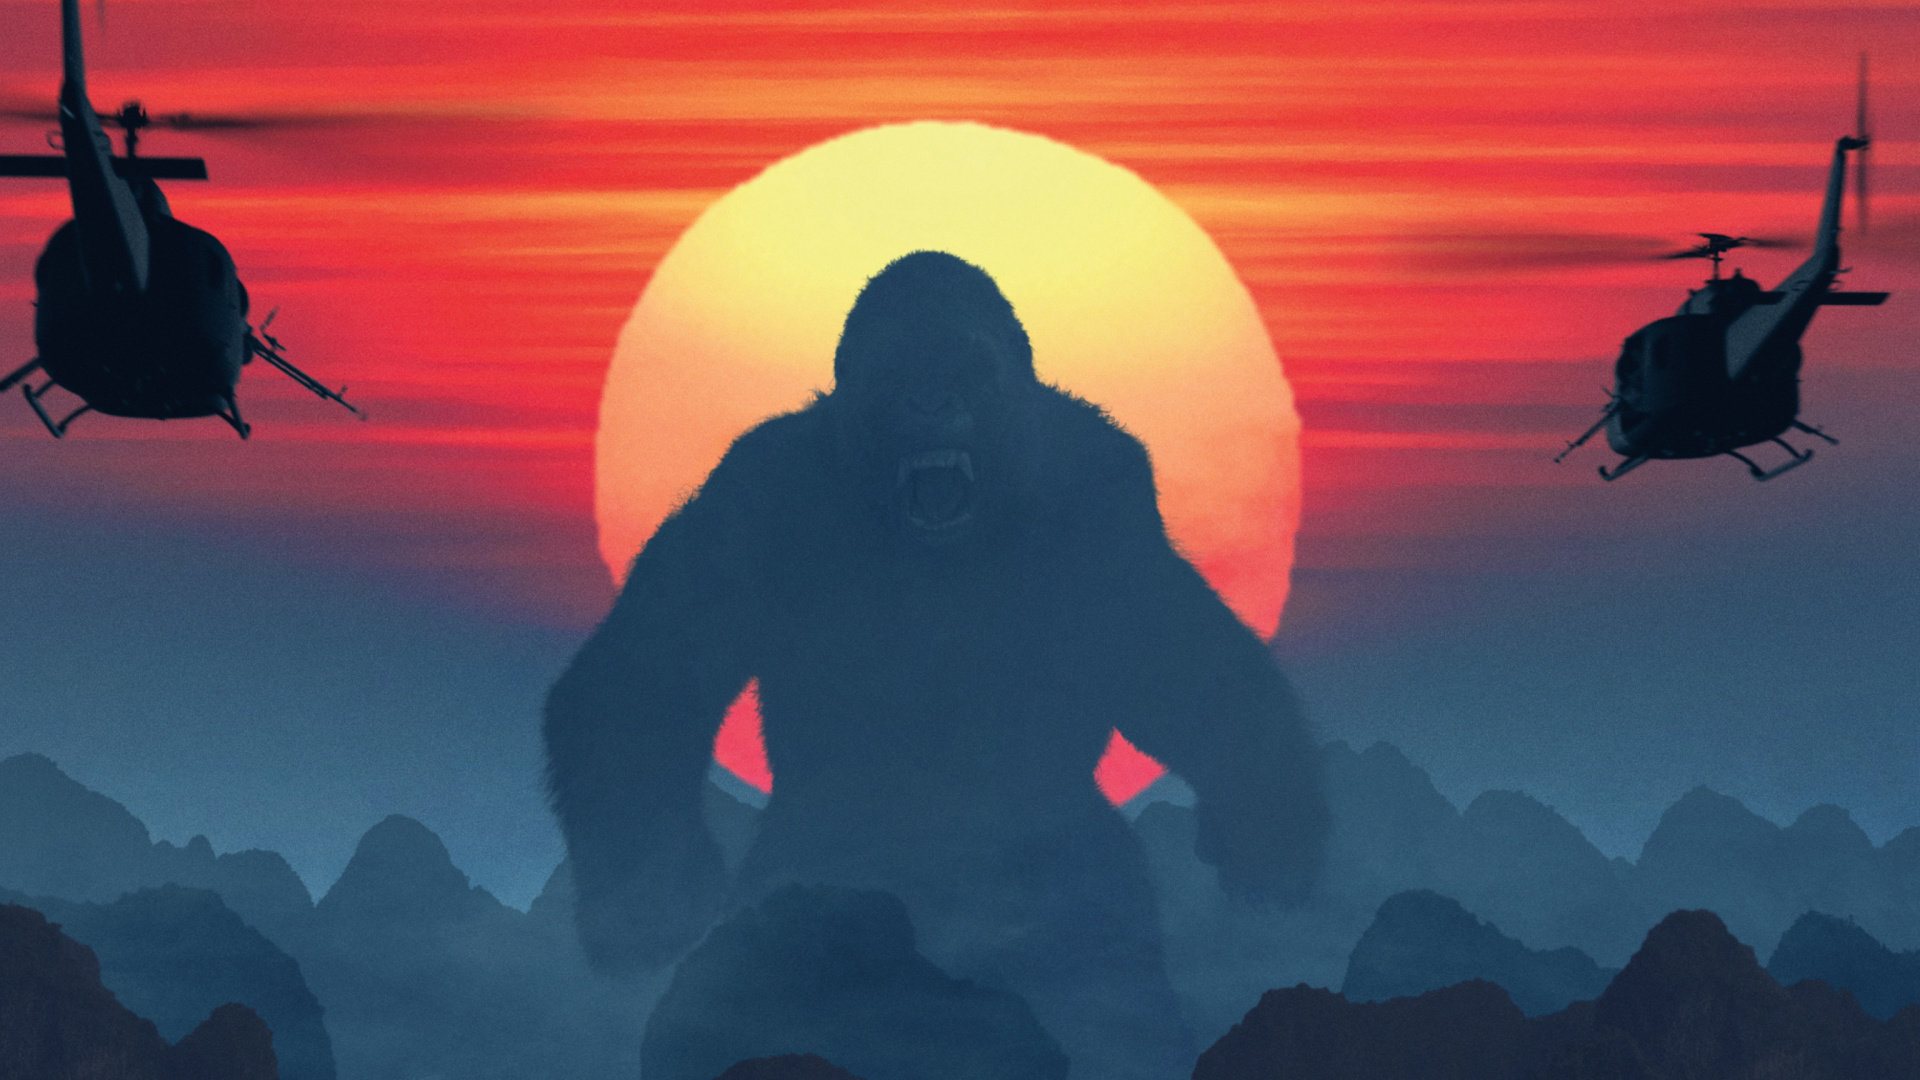 King Kong 2017 wallpaper 1920x1080